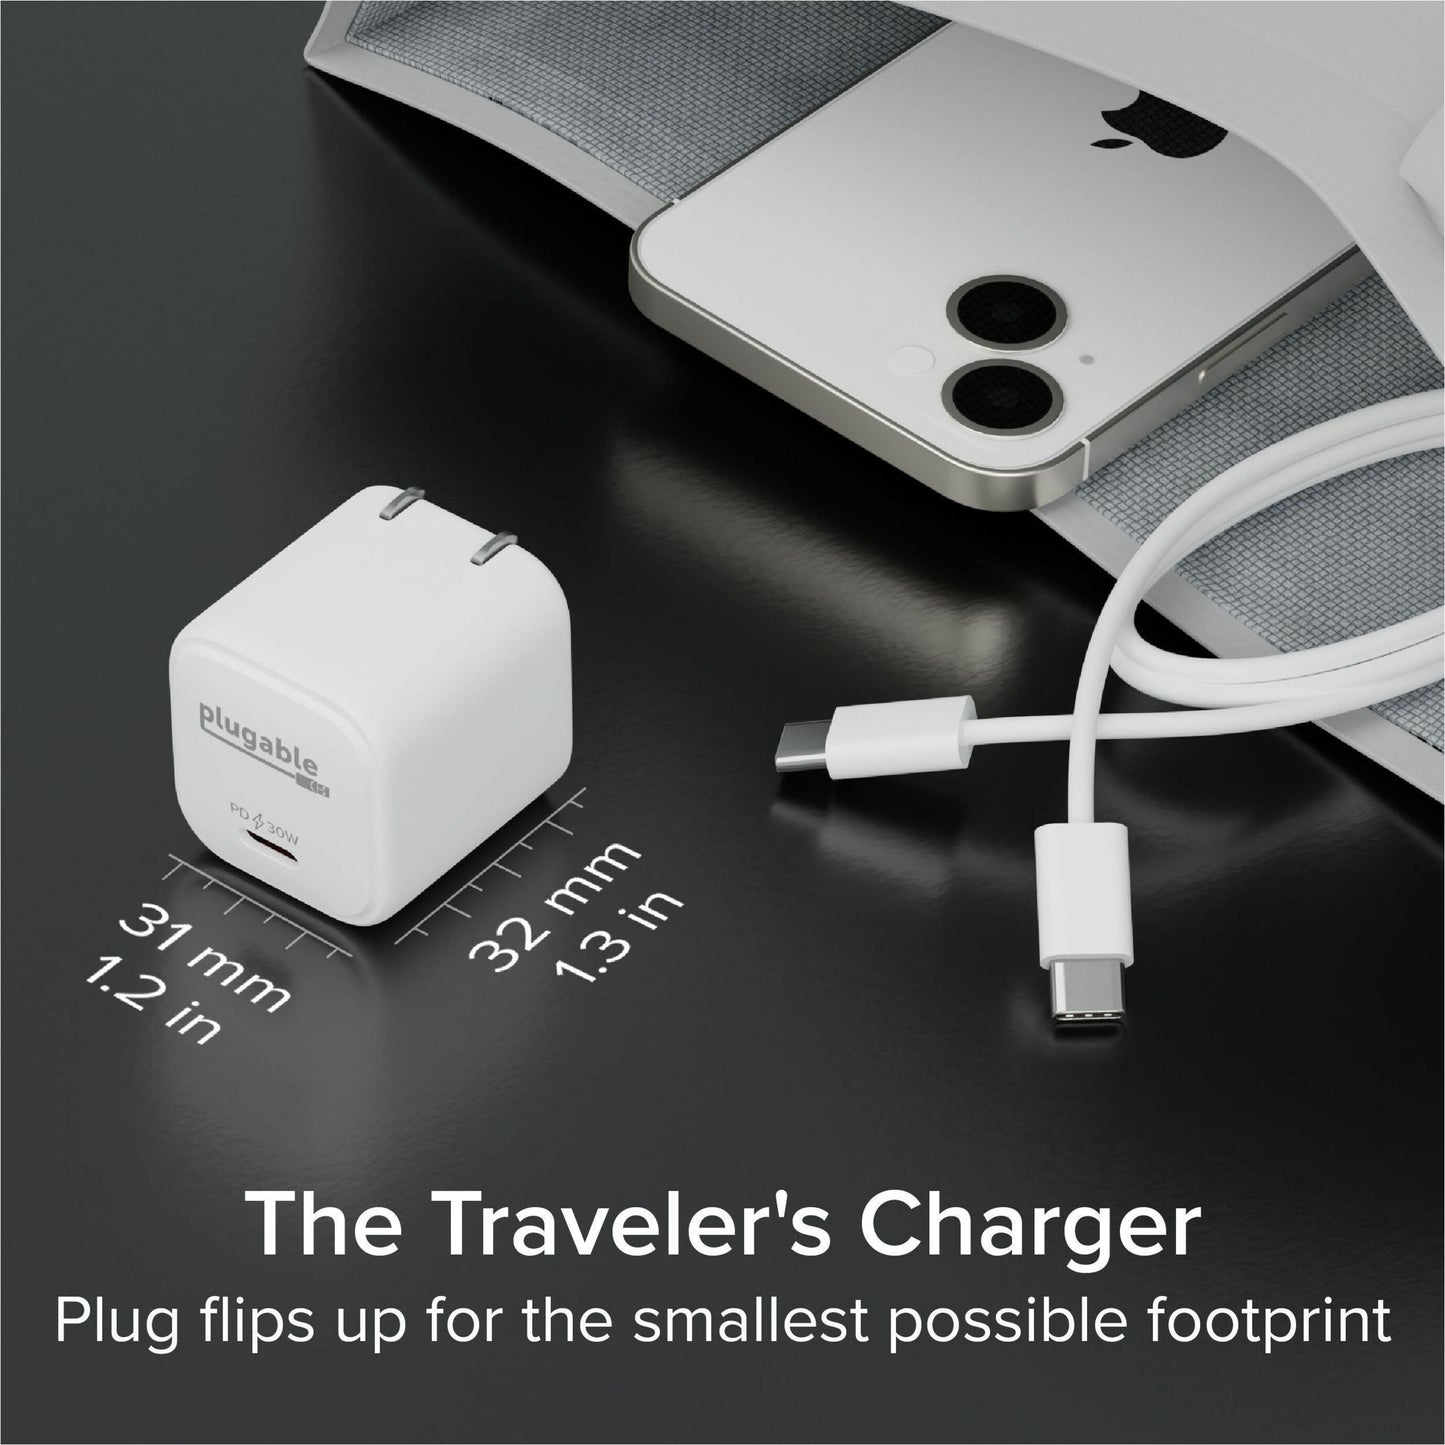 Plugable GaN USB C Charger Block 30W Portable Charger